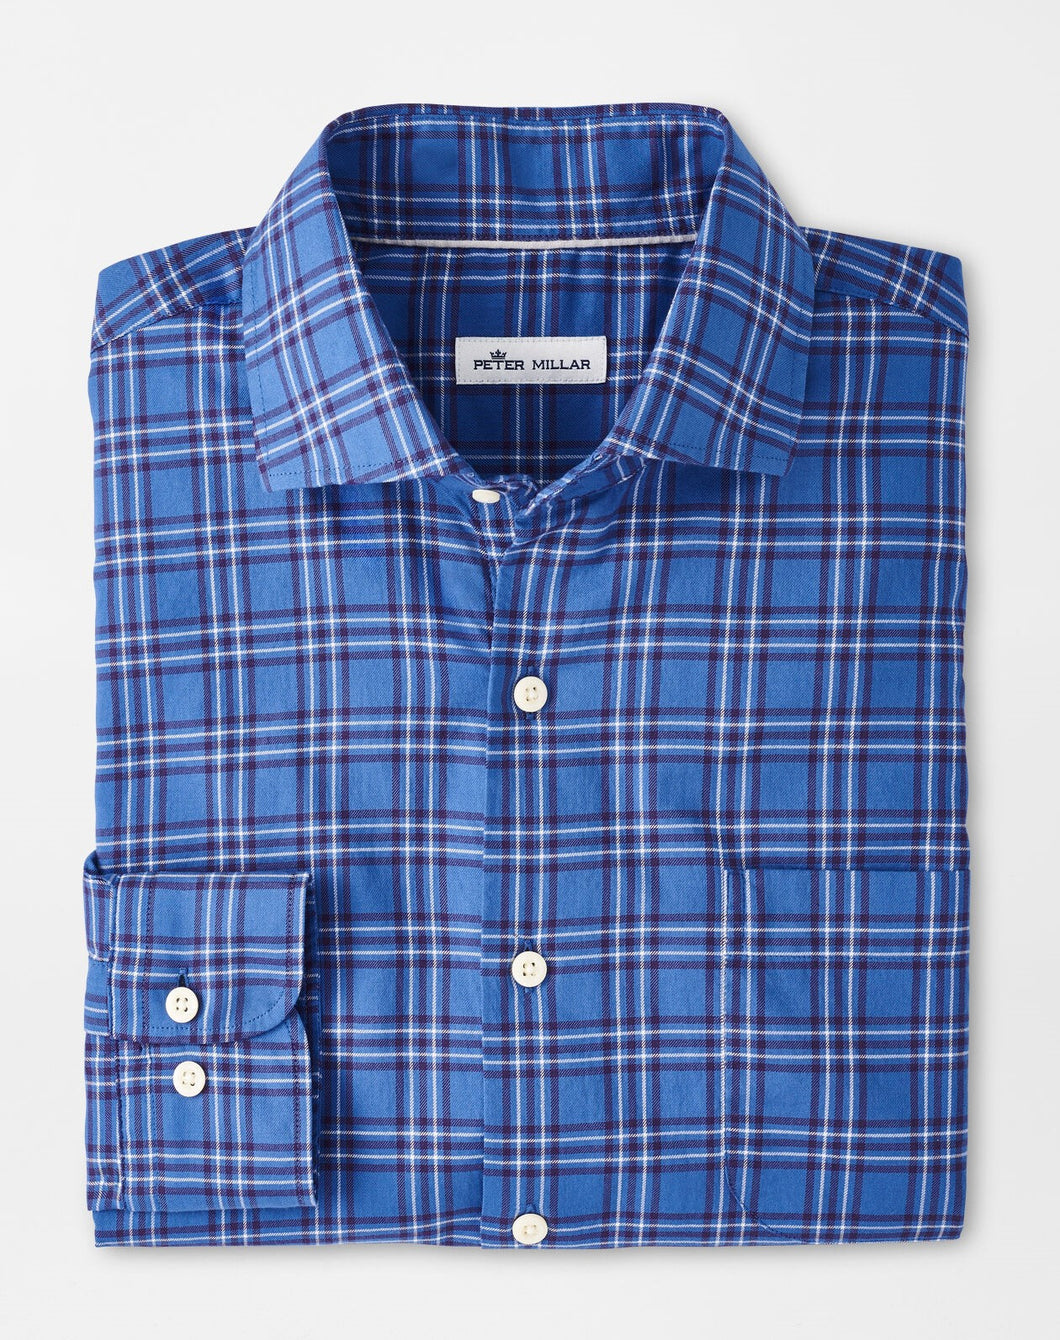 Peter Millar Ward Cotton Sport Shirt in Nordic Blue